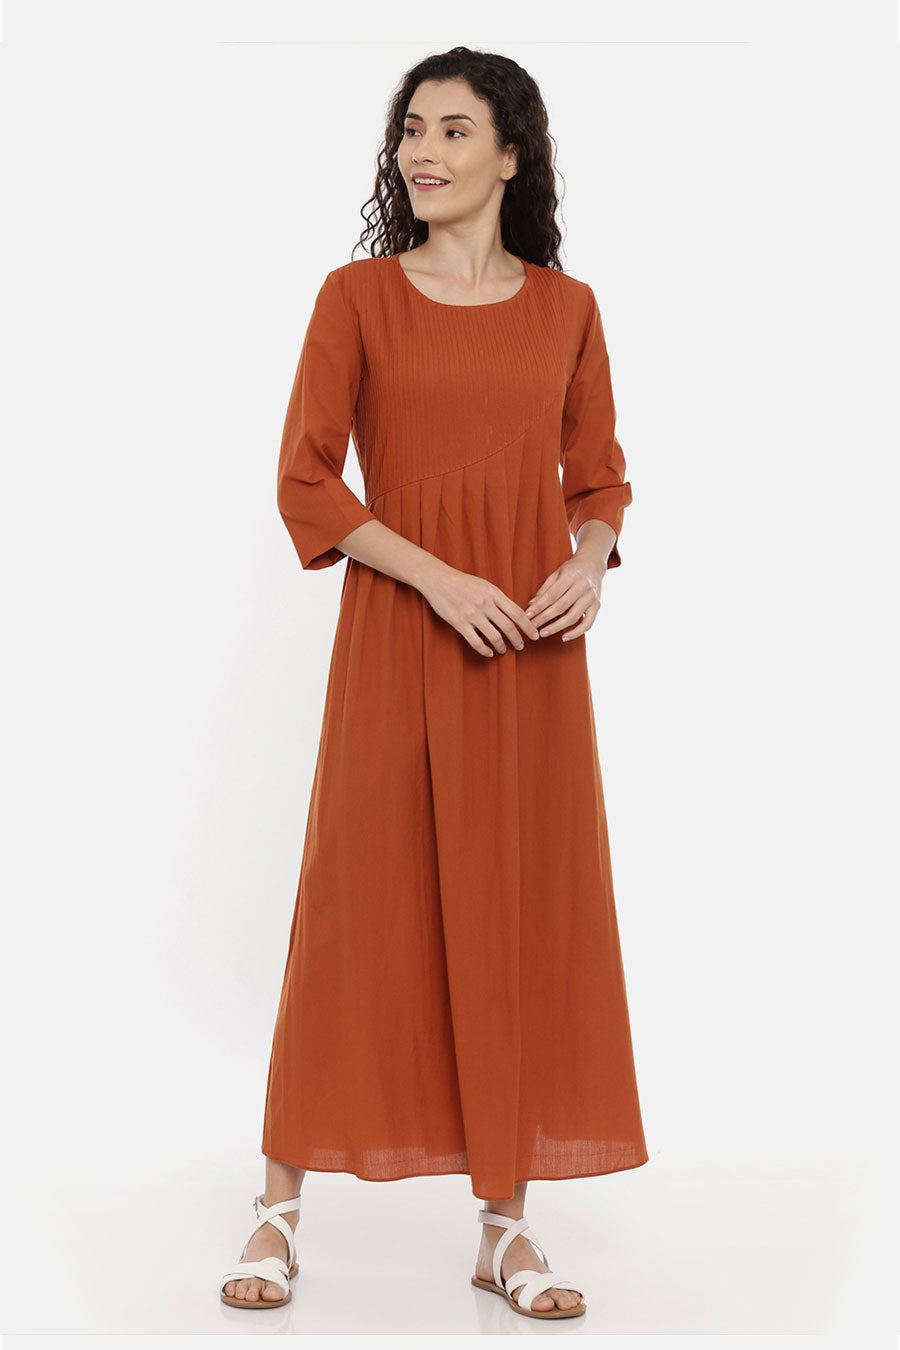 Rust Orange Cotton Pleated Dress